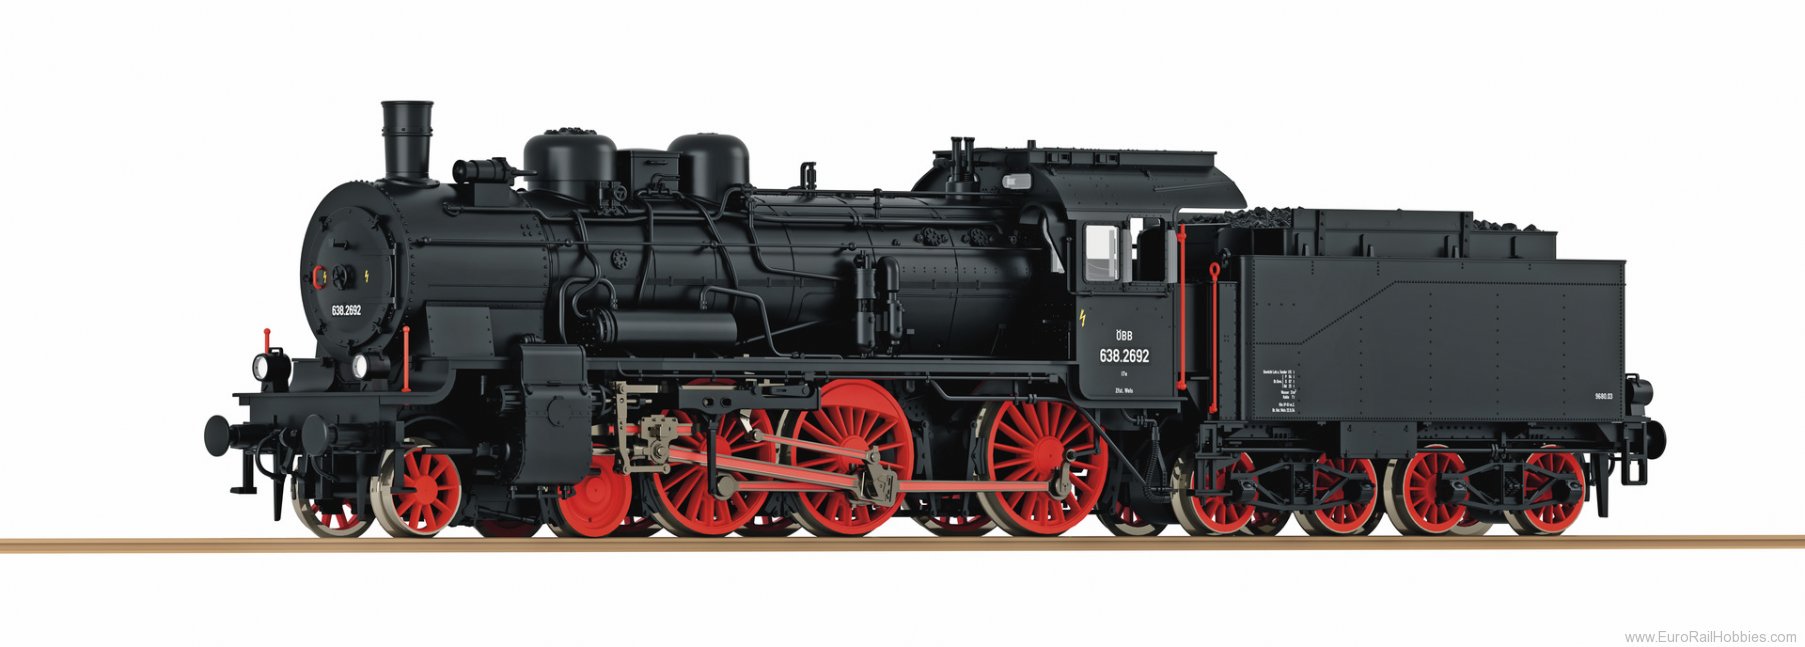 Roco 79394 Steam locomotive 638.2692, ÃBB (Marklin AC